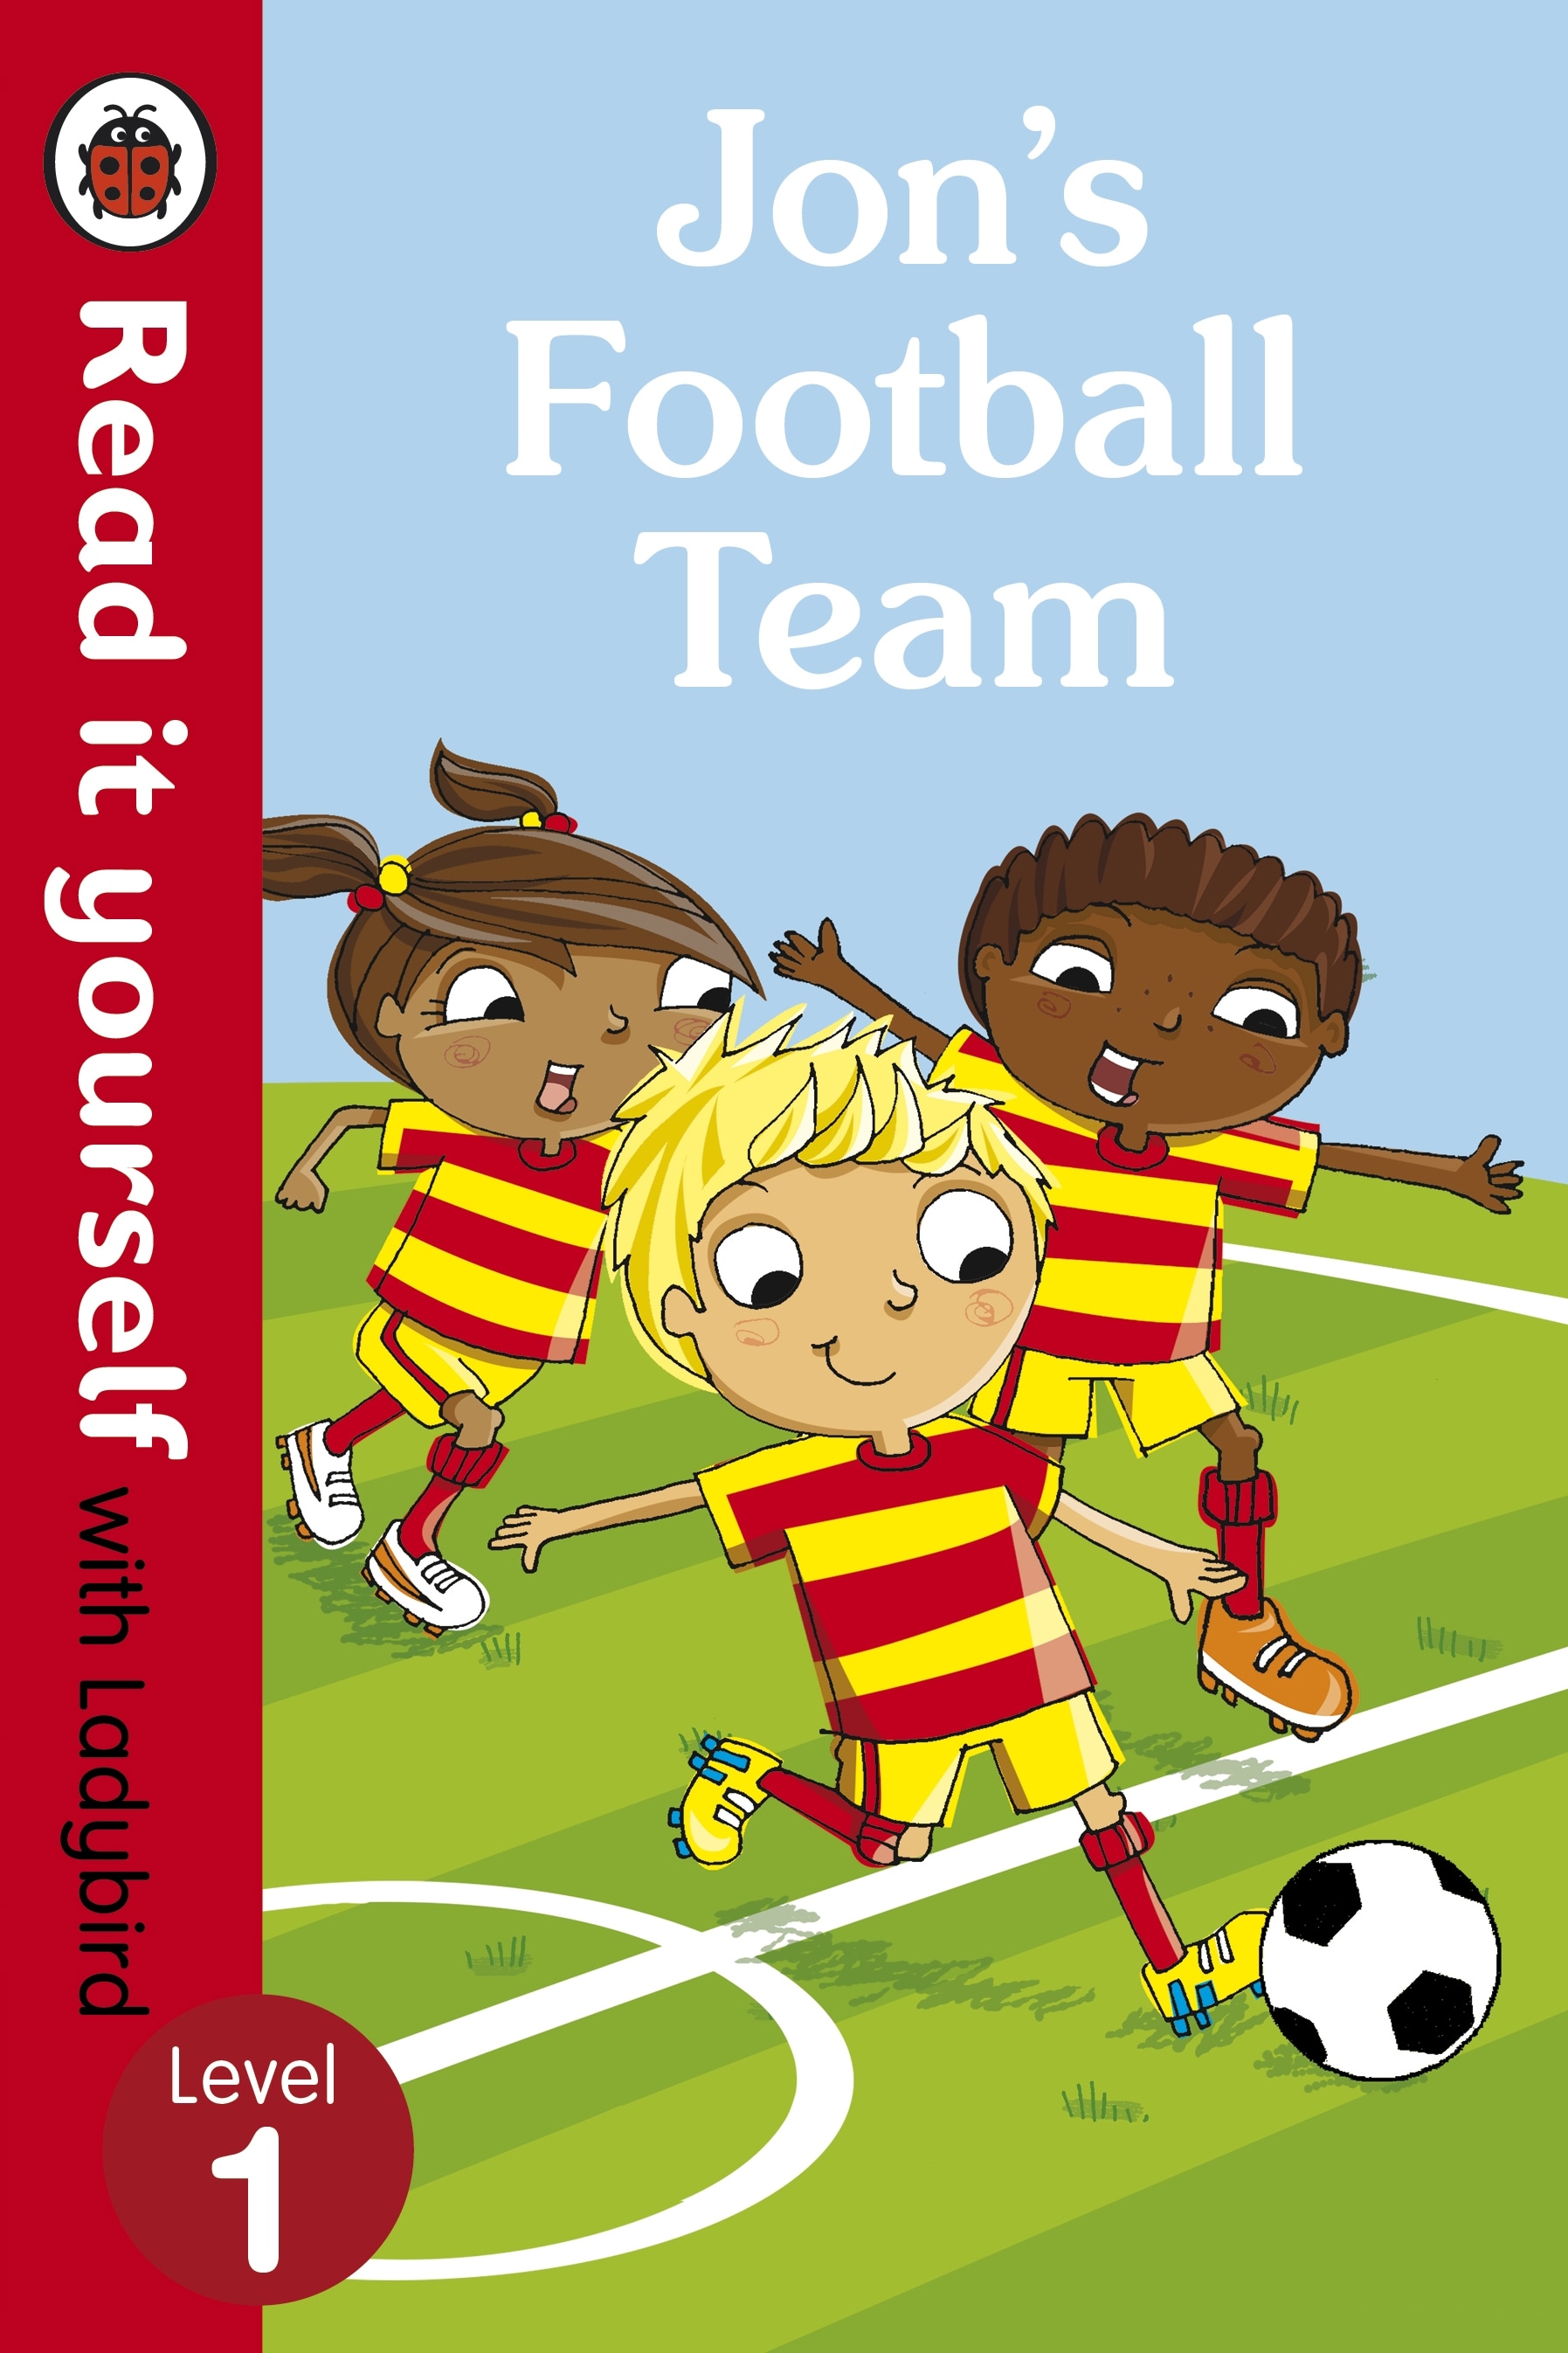 Jon's Football Team - Read it yourself with Ladybird: Level 1